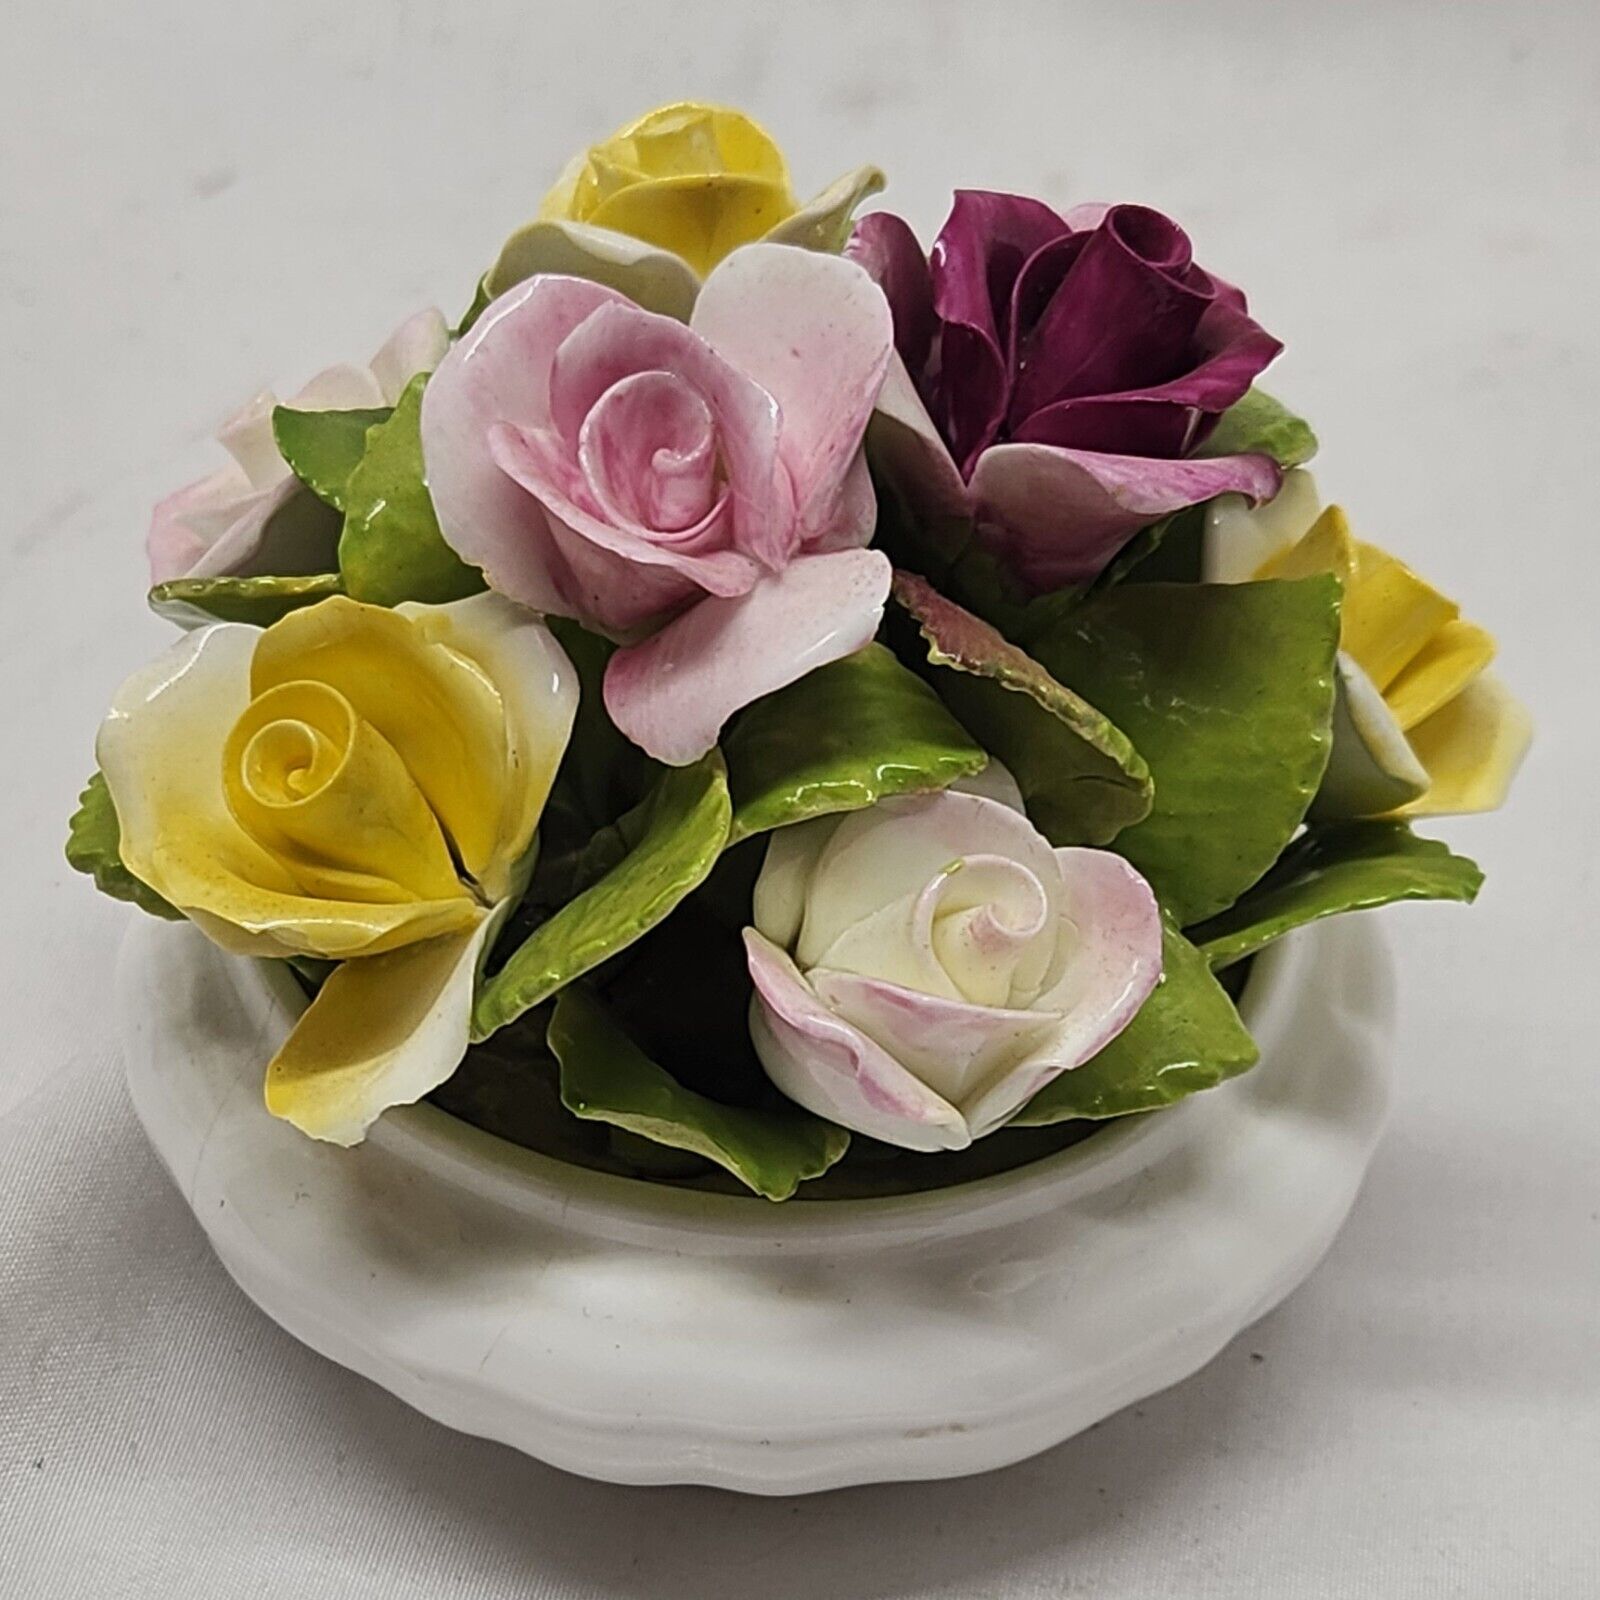 Vintage Coalport Porcelain Flower Bouquet England Floral Bone China 3.25in x 3.5